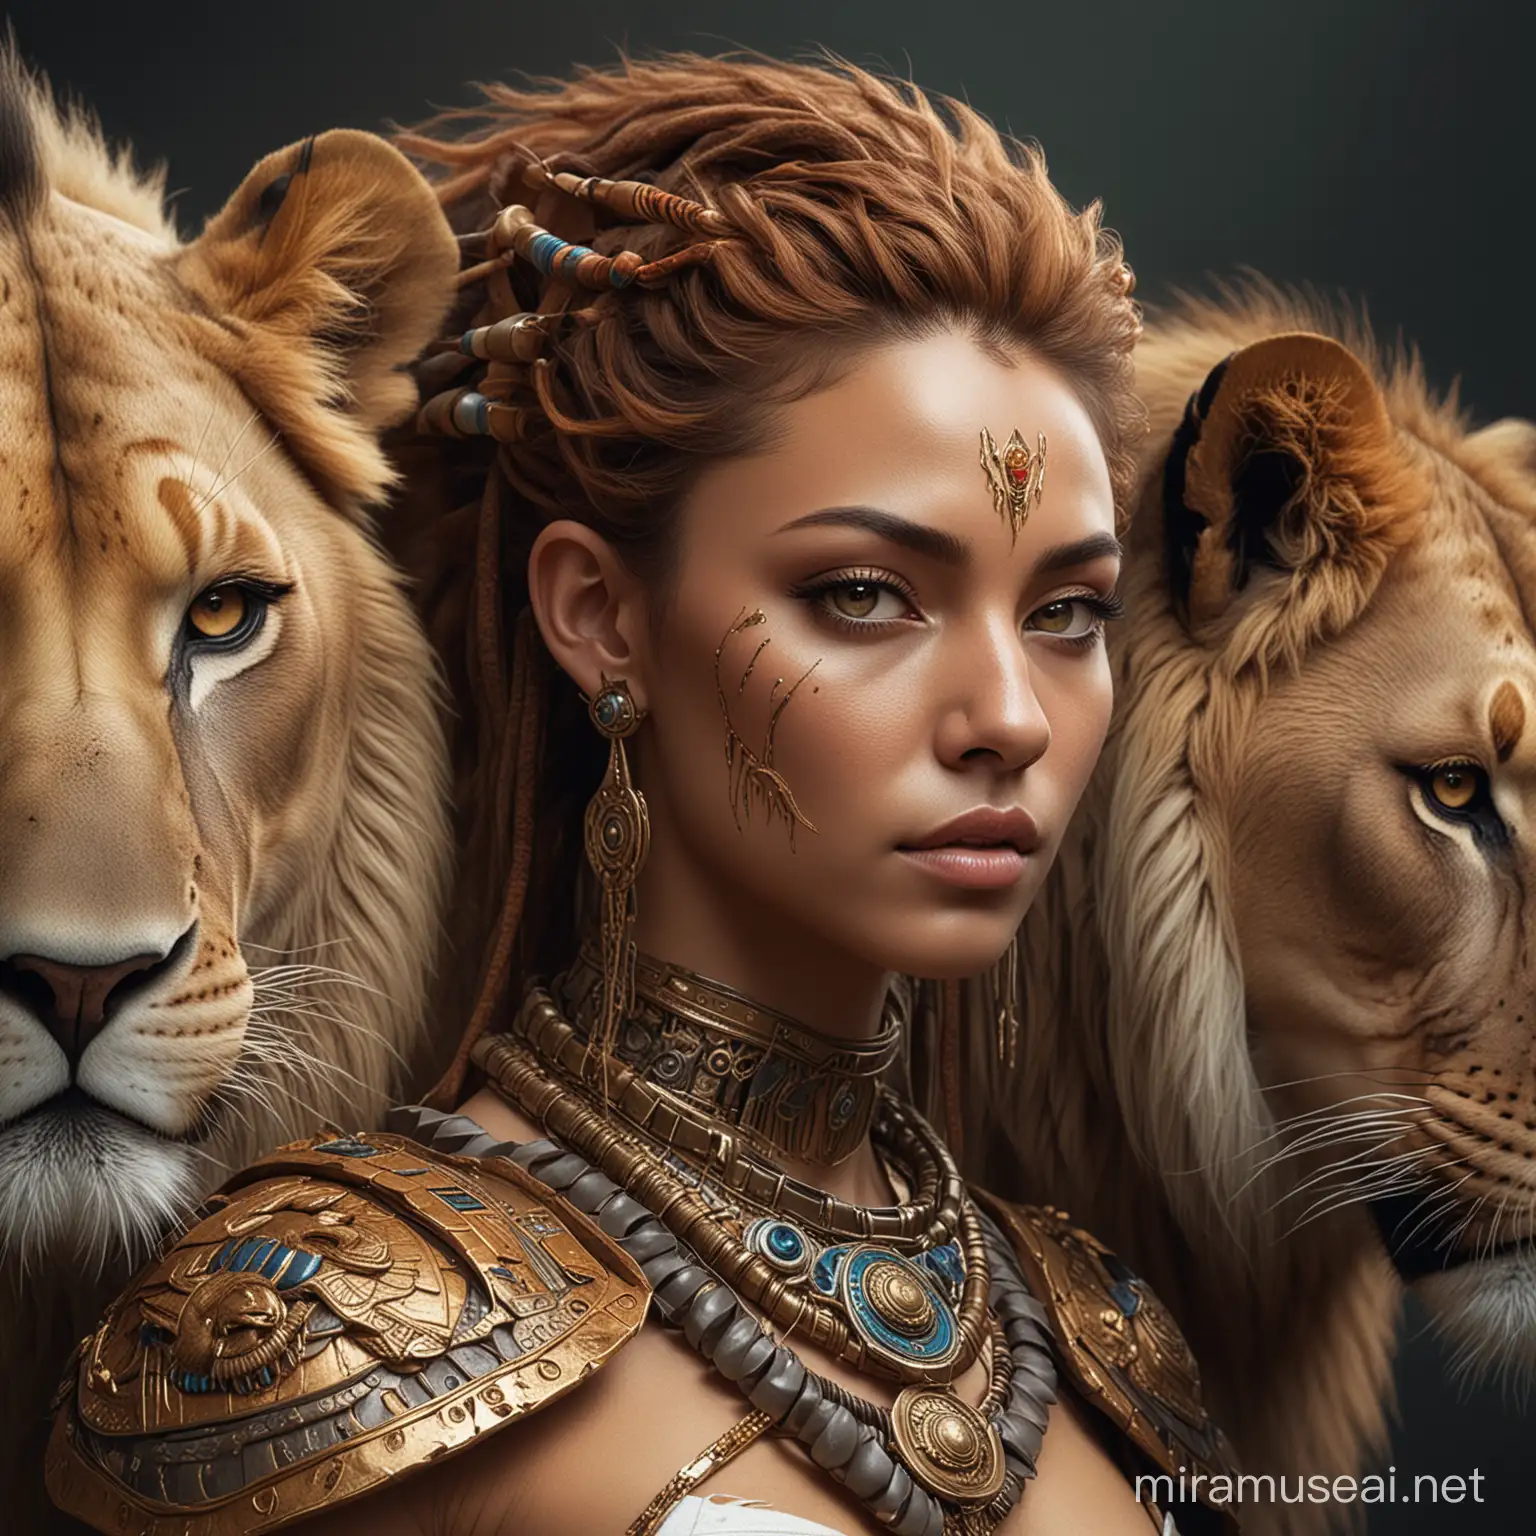 create a Digital 2D Fantasy,  Portraits of an lioness emperors, hybrid between woman an lion,  human and animal hybrid, science fiction, empress, goddess, tribal
woman , tribal fantasy, cyberpunk
